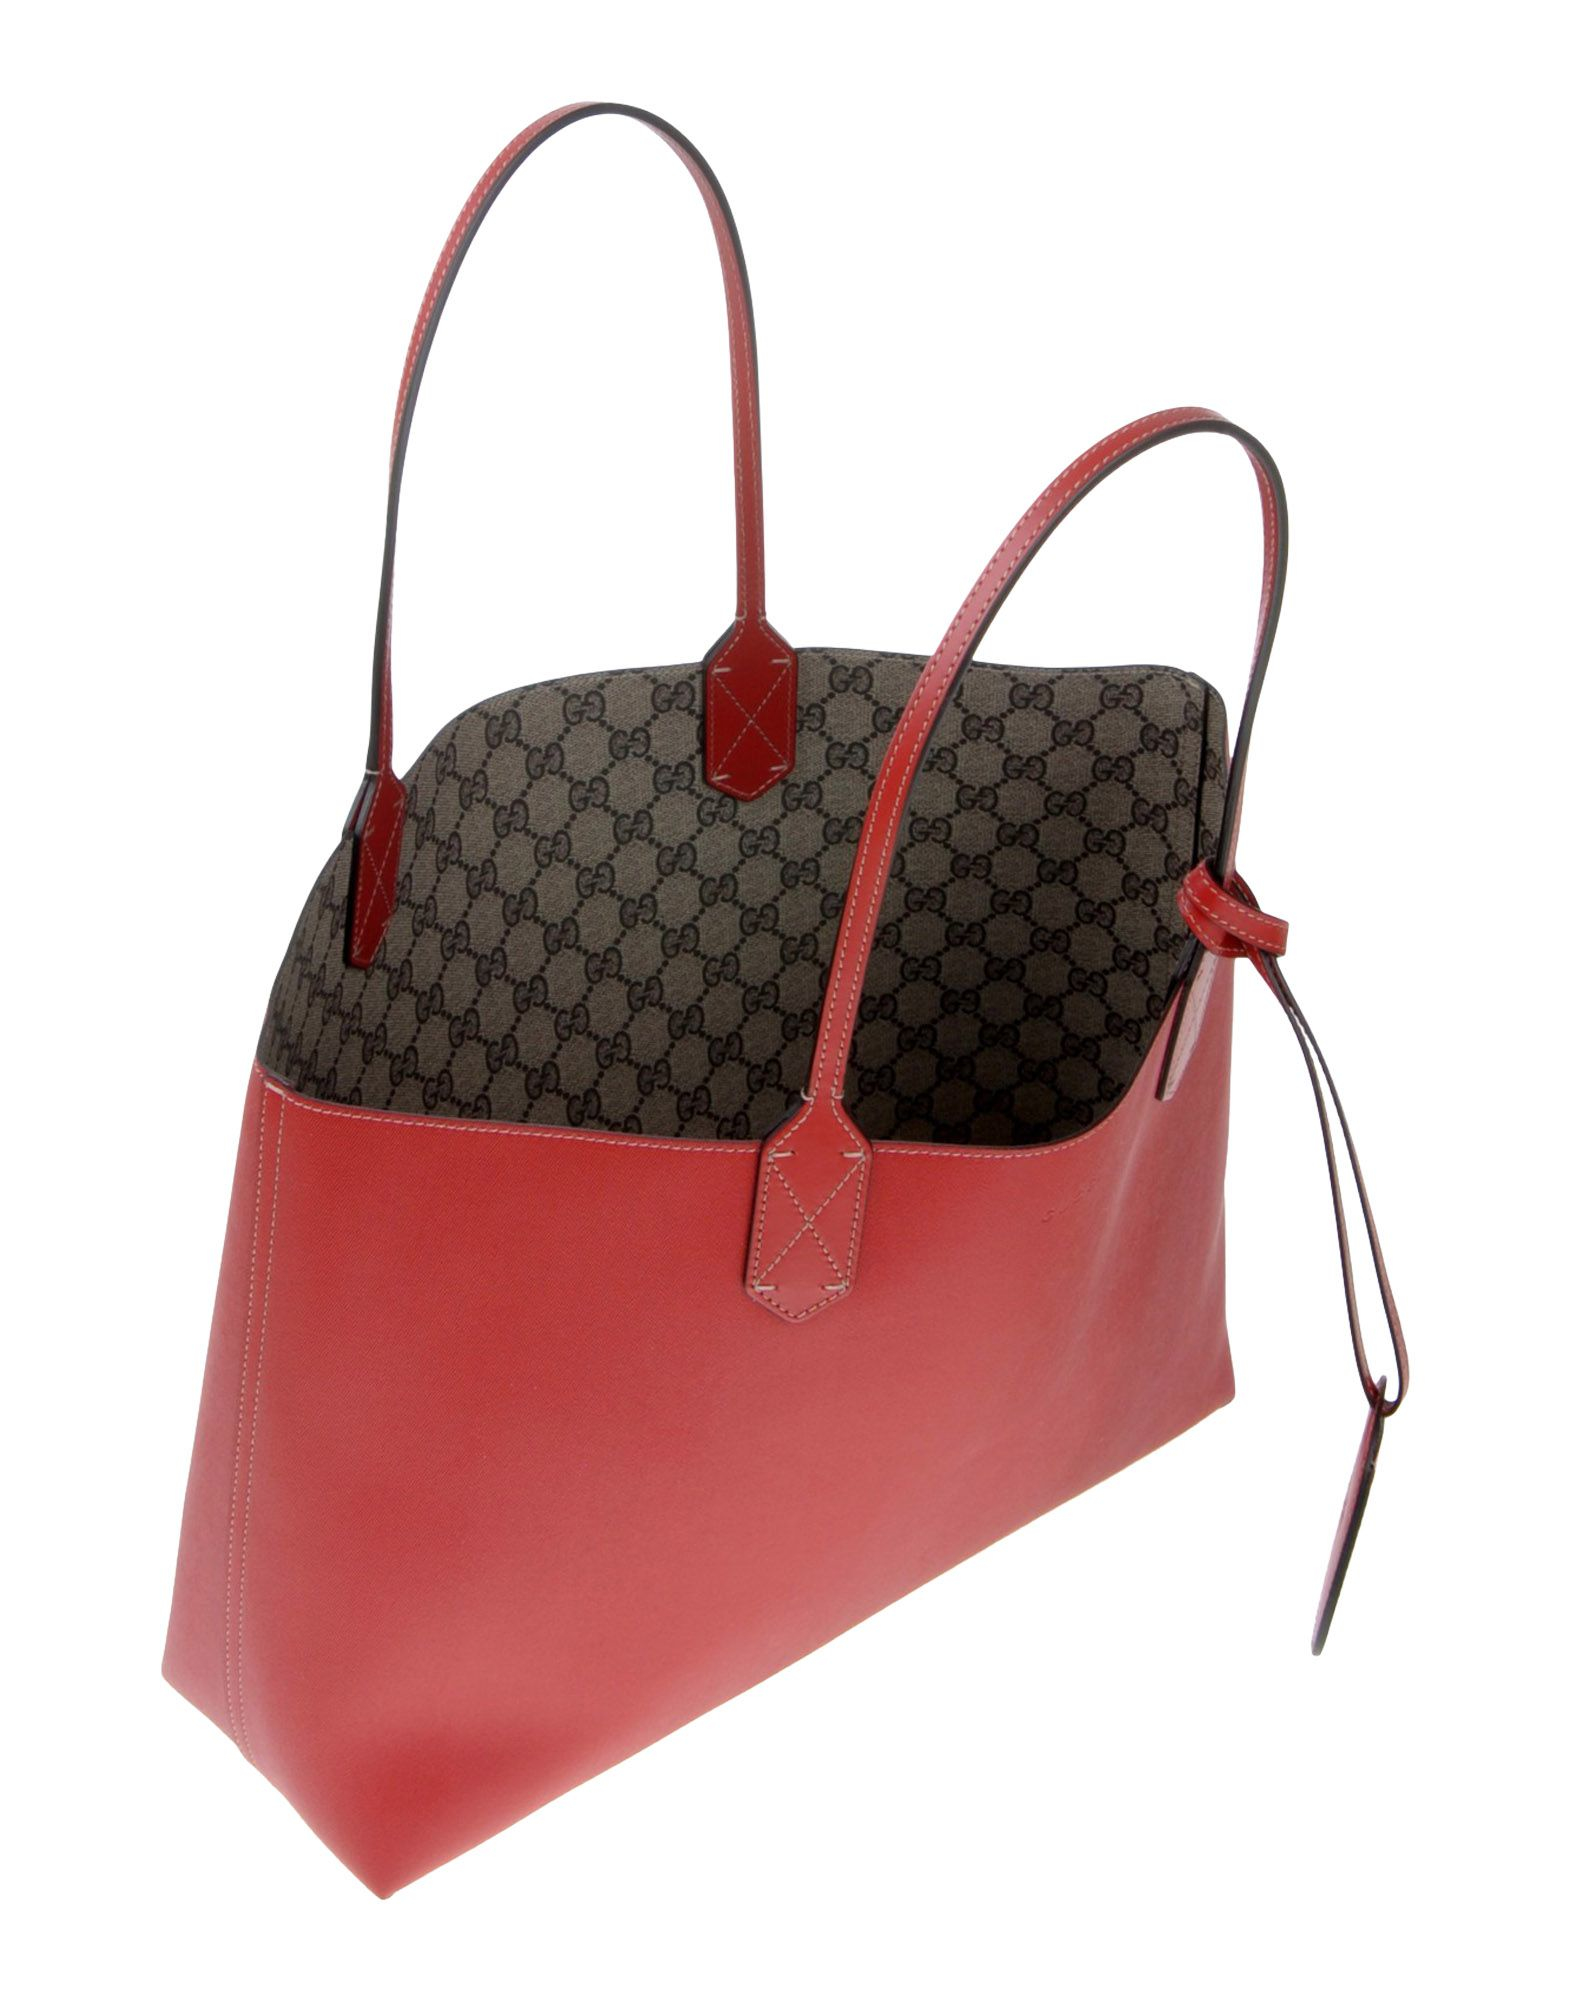 Lyst - Gucci Handbag in Red